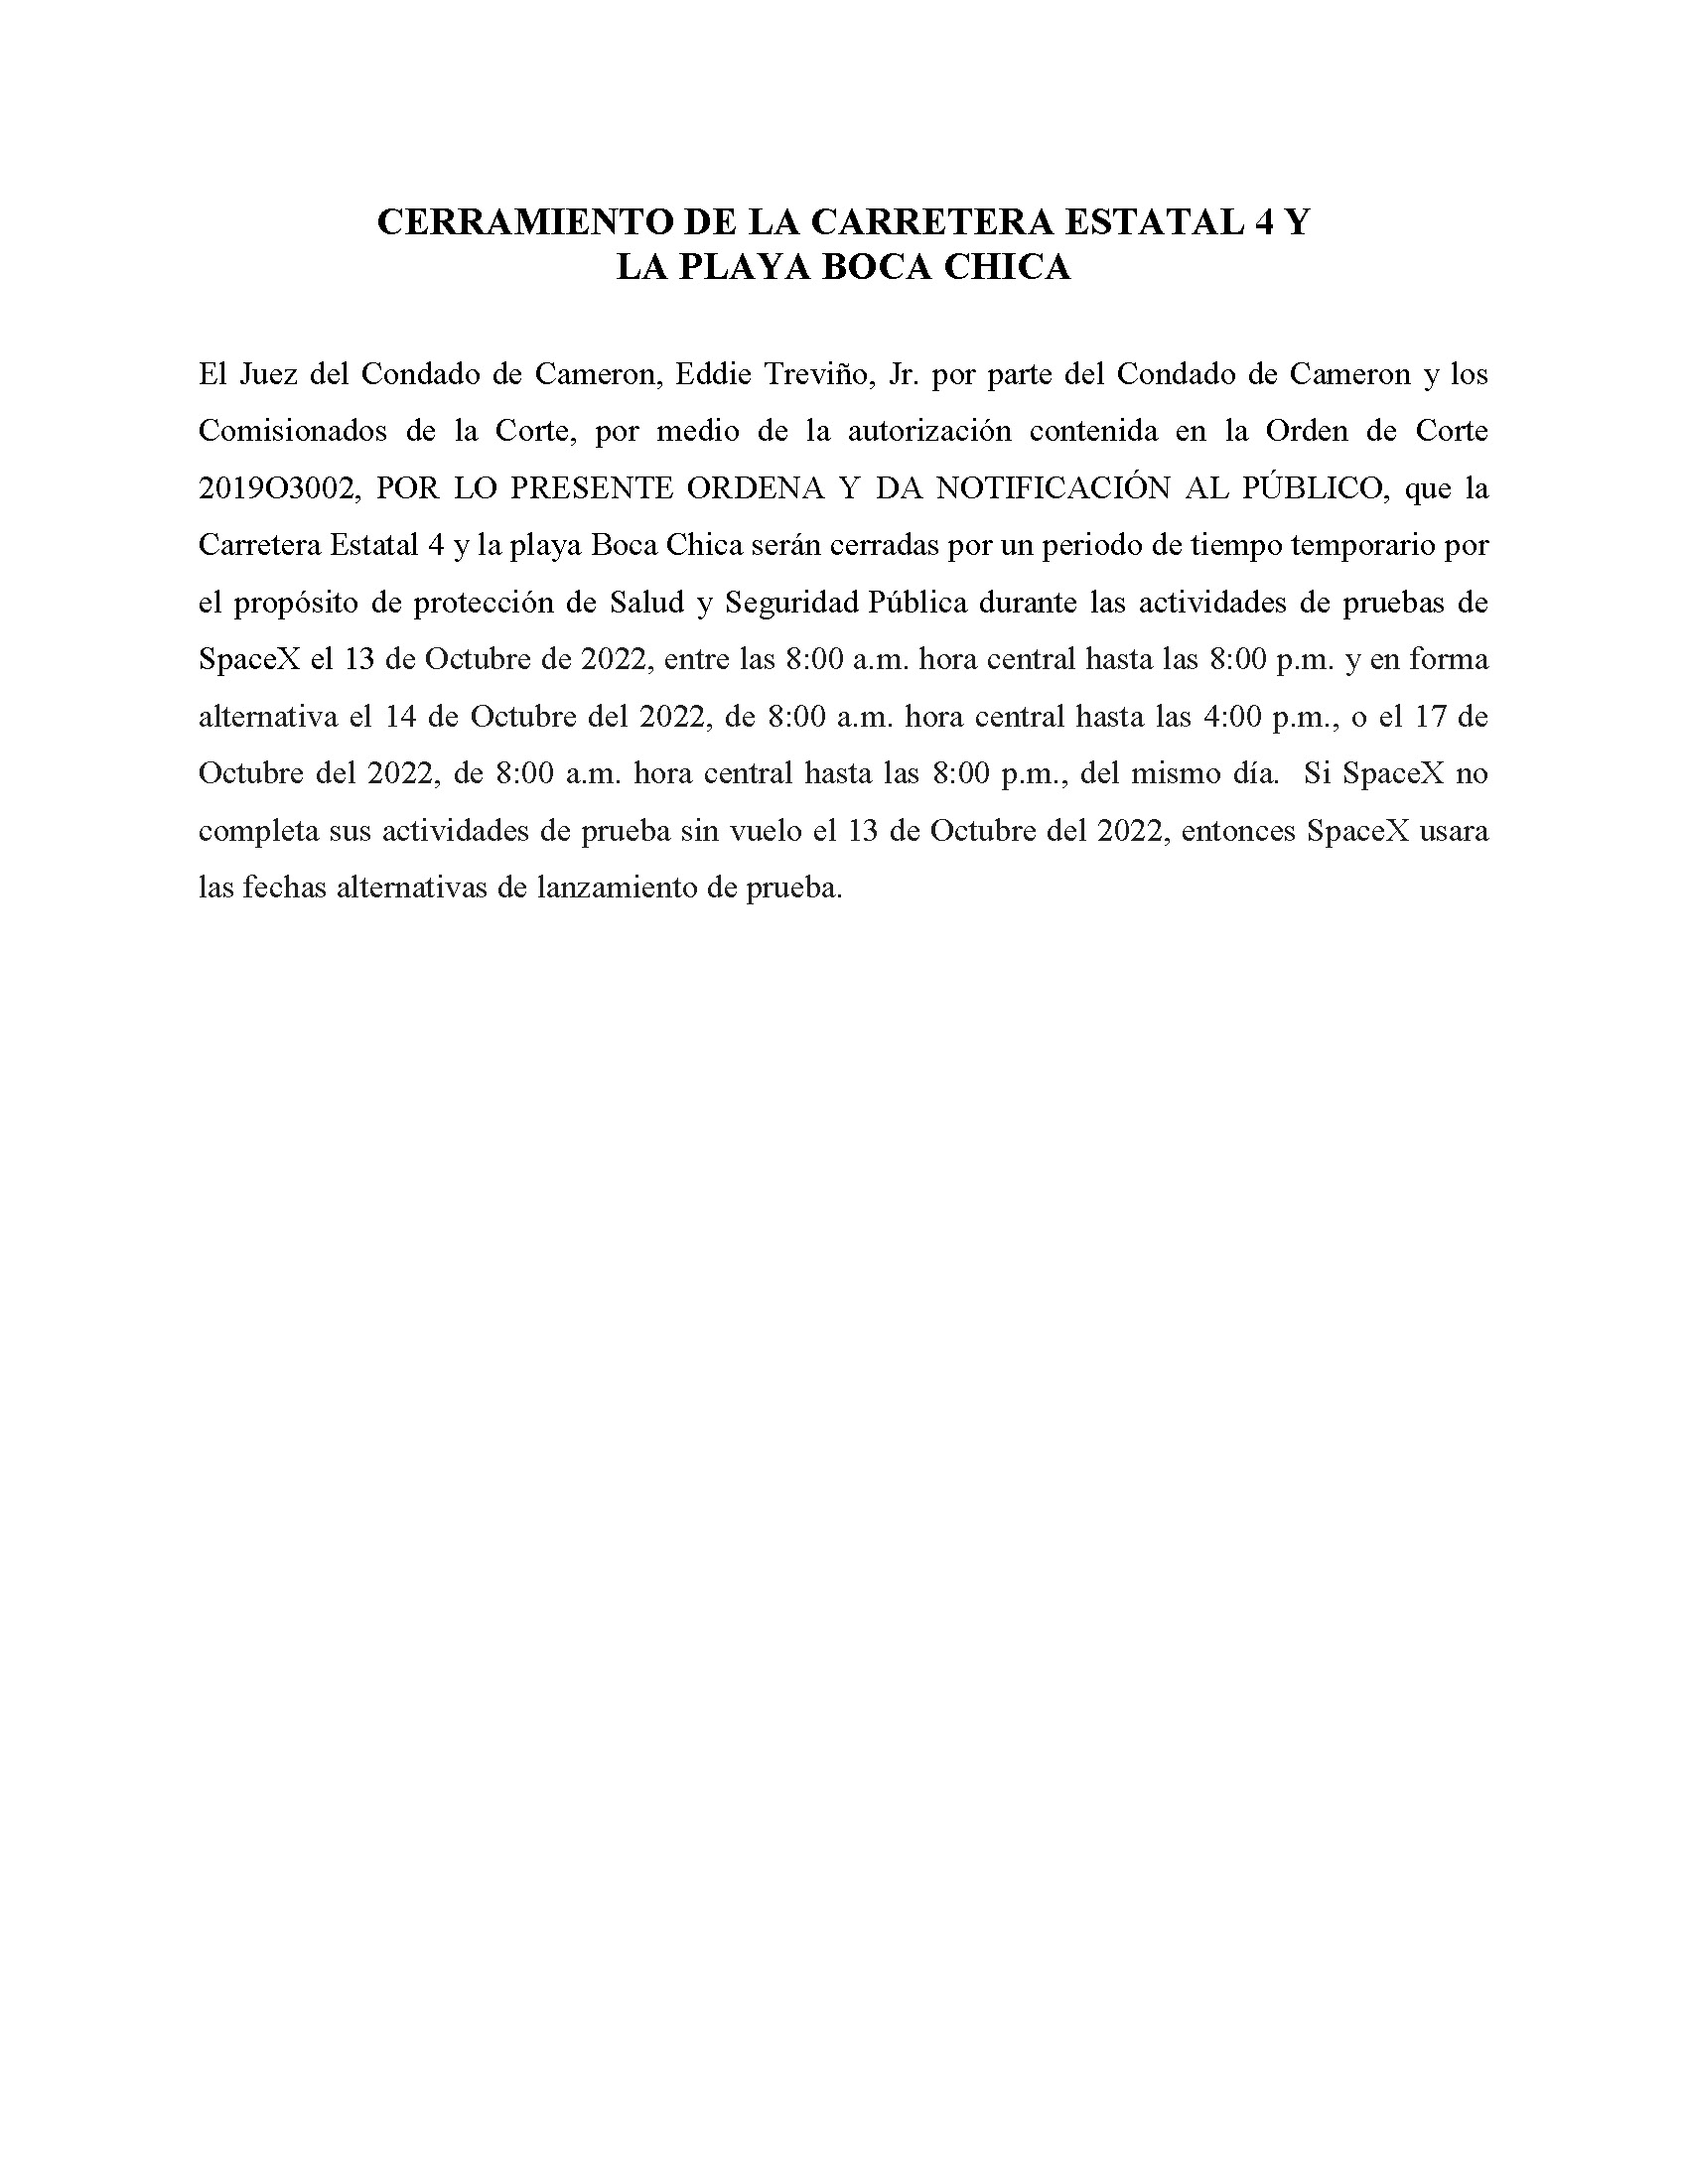 ORDER.CLOSURE OF HIGHWAY 4 Y LA PLAYA BOCA CHICA.SPANISH.10.13.2022